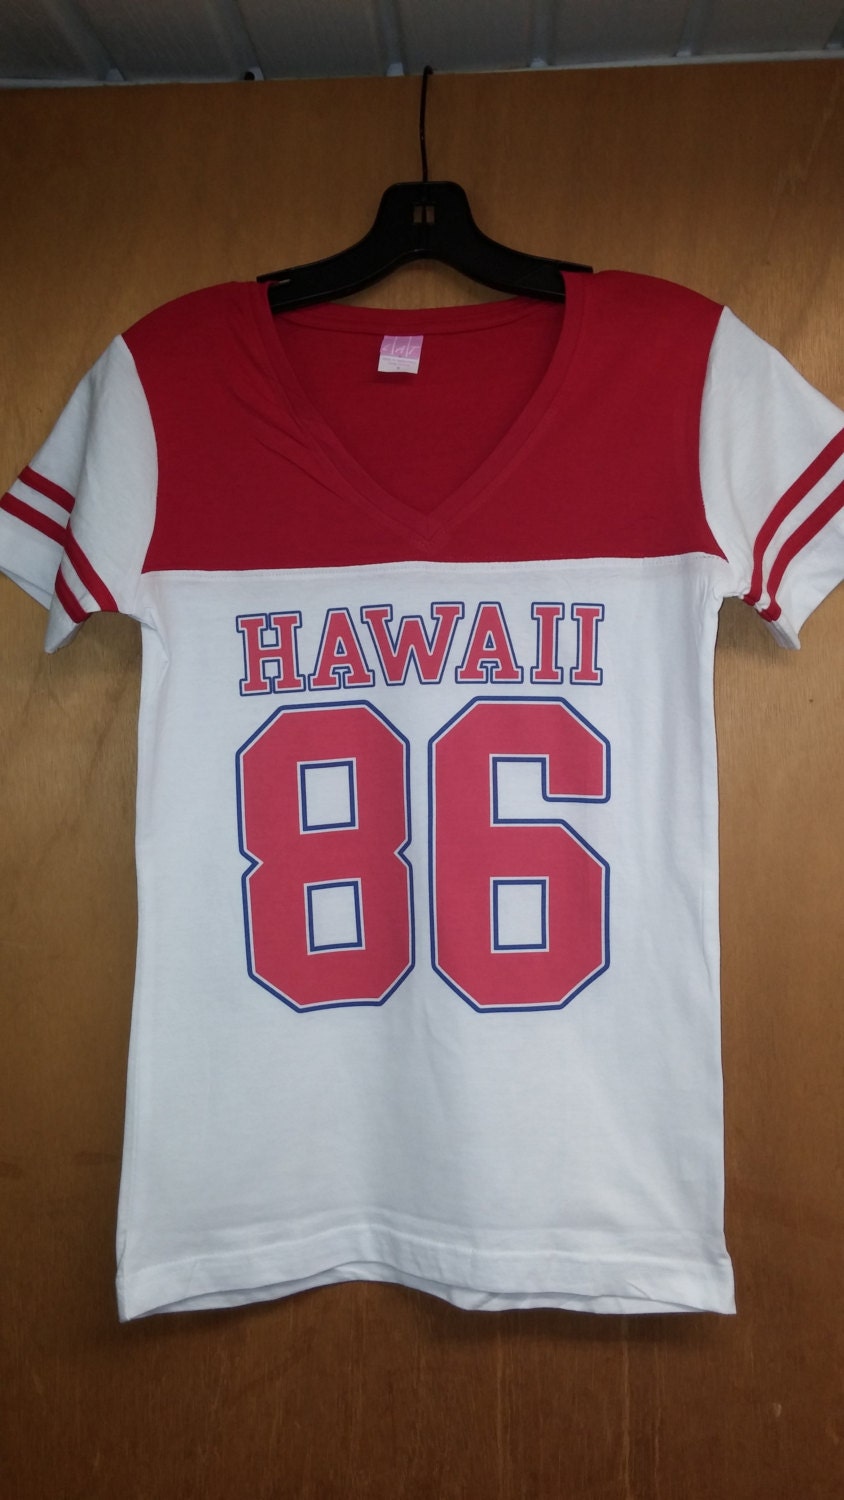 Download Hawaii 86 Vintage Football Jersey T-Shirt by BuffaloPrintsNJ